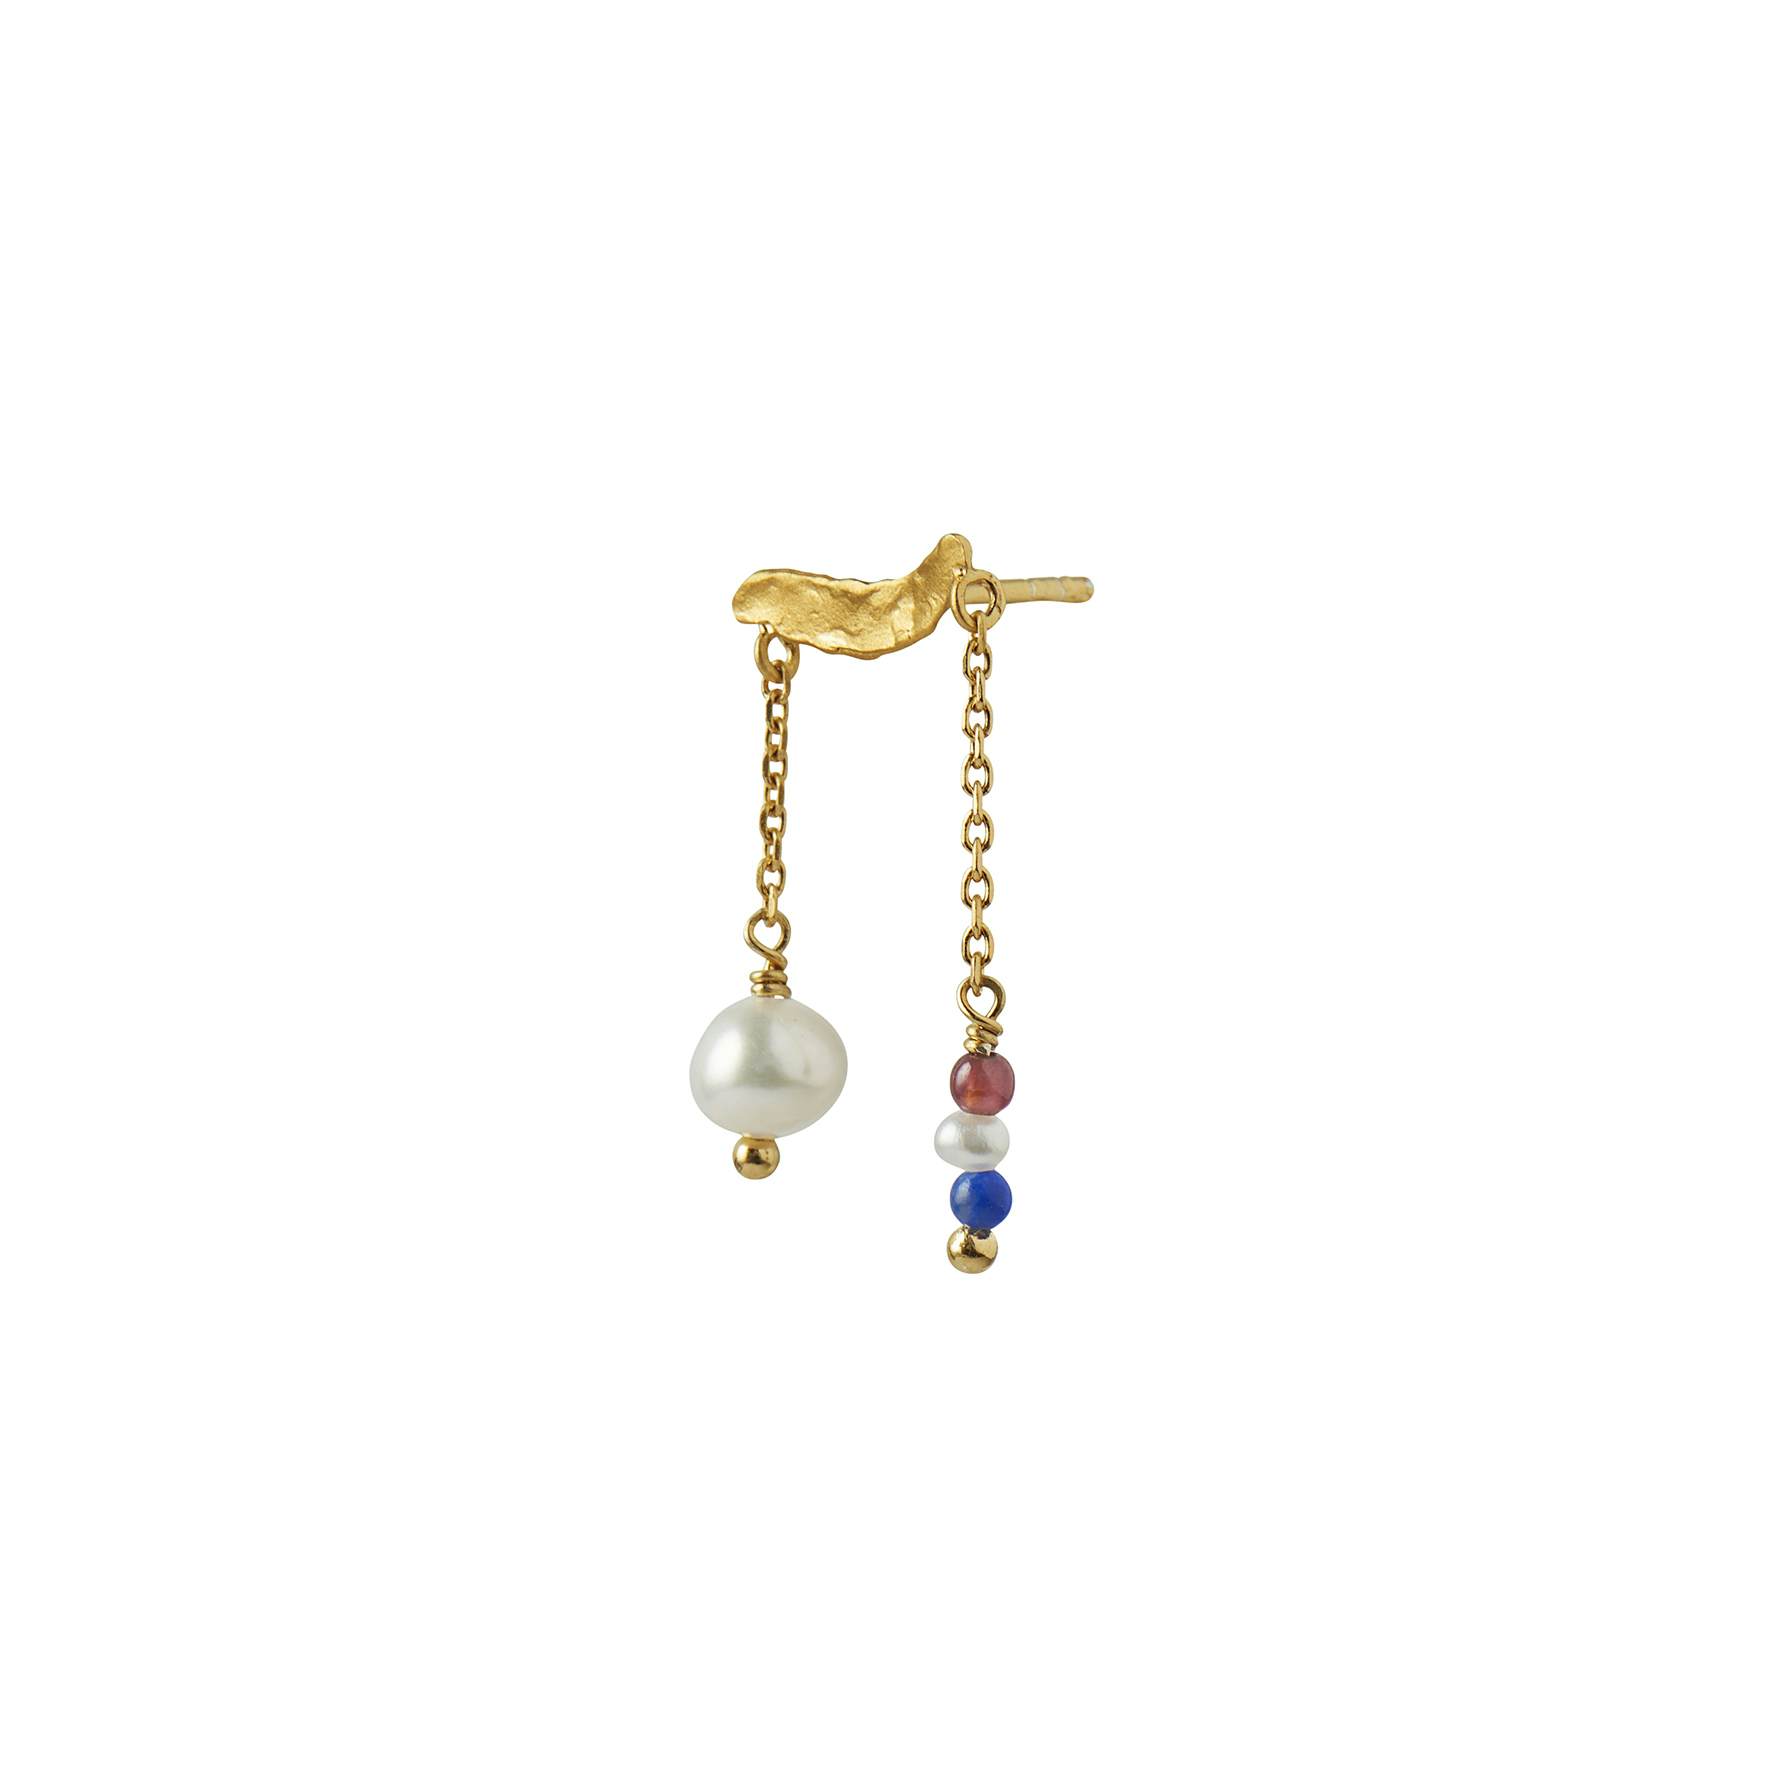 Petit Gold Splash Earring Chains & French Kiss fra STINE A Jewelry i Forgyldt-Sølv Sterling 925